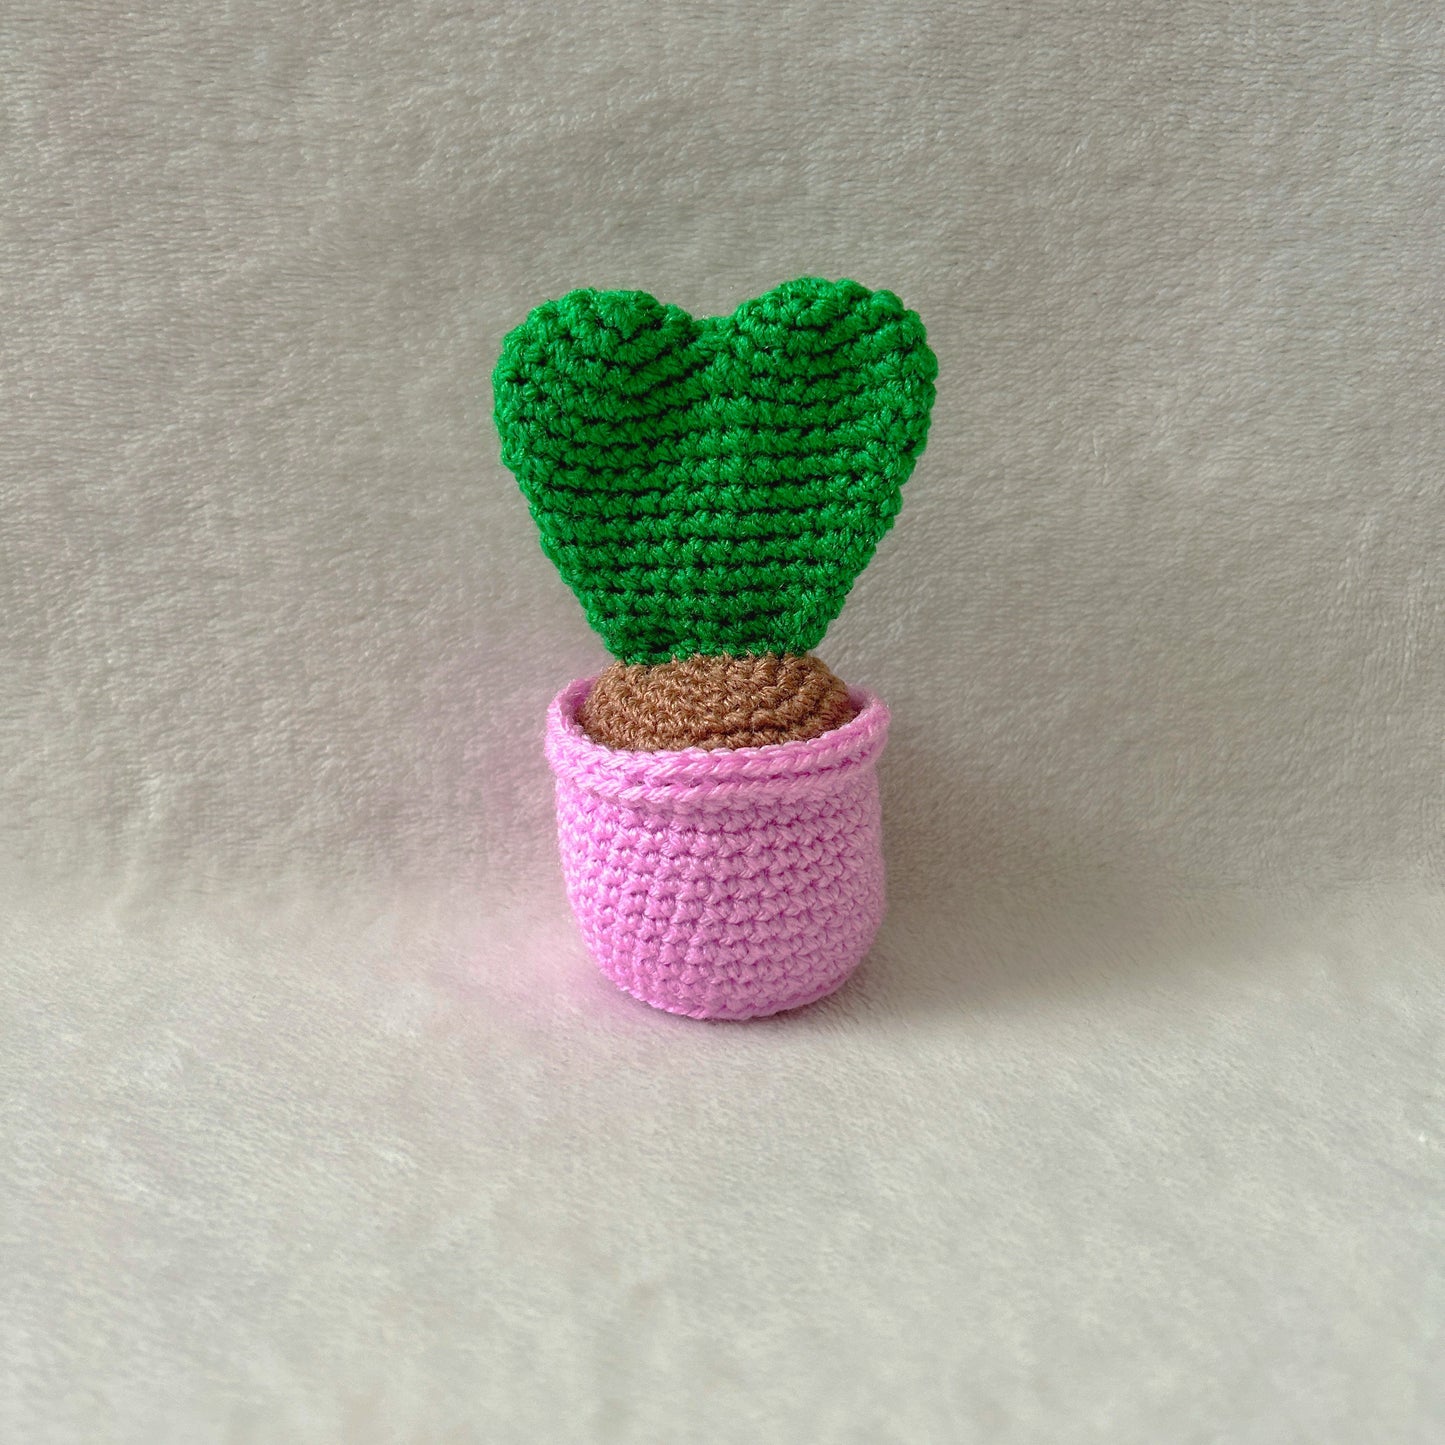 Heart Crochet Succulent Plant